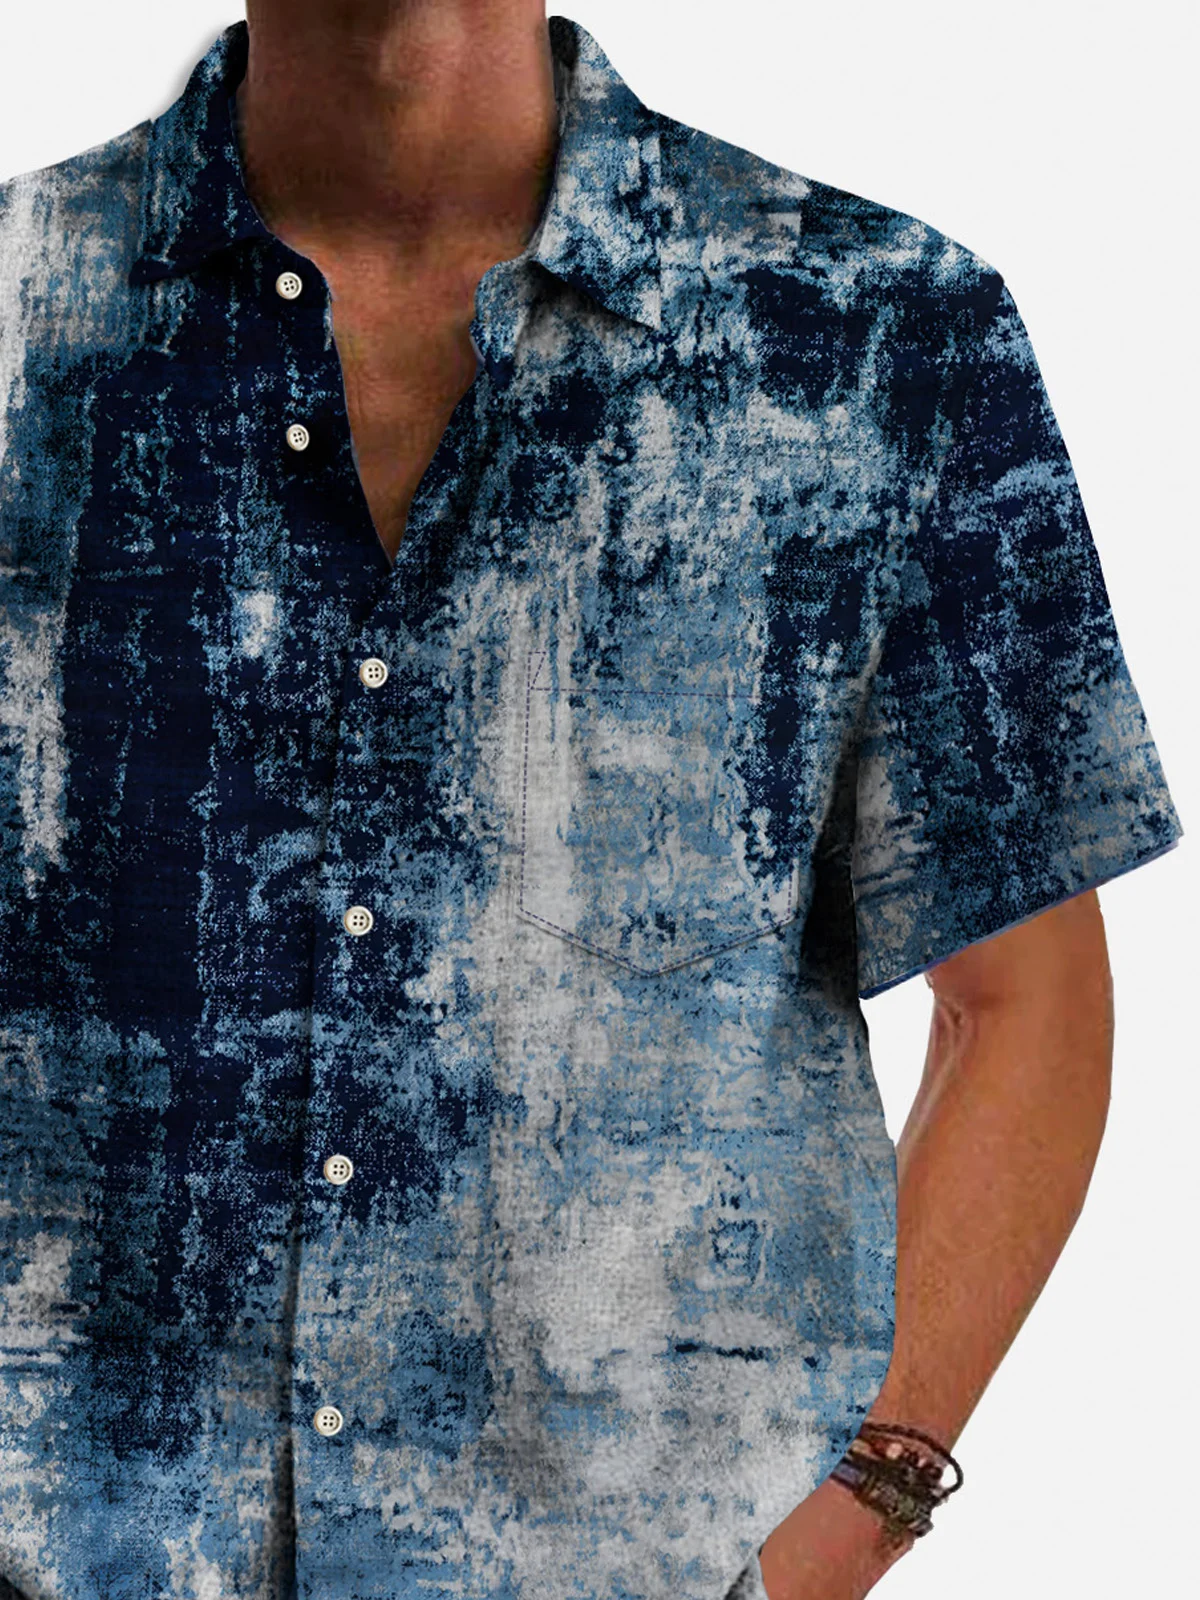 Royaura® 60's Retro Art Textured Men's Shirt Wrinkle Free Seersucker Pocket Camp Art Shirt  Big Tall